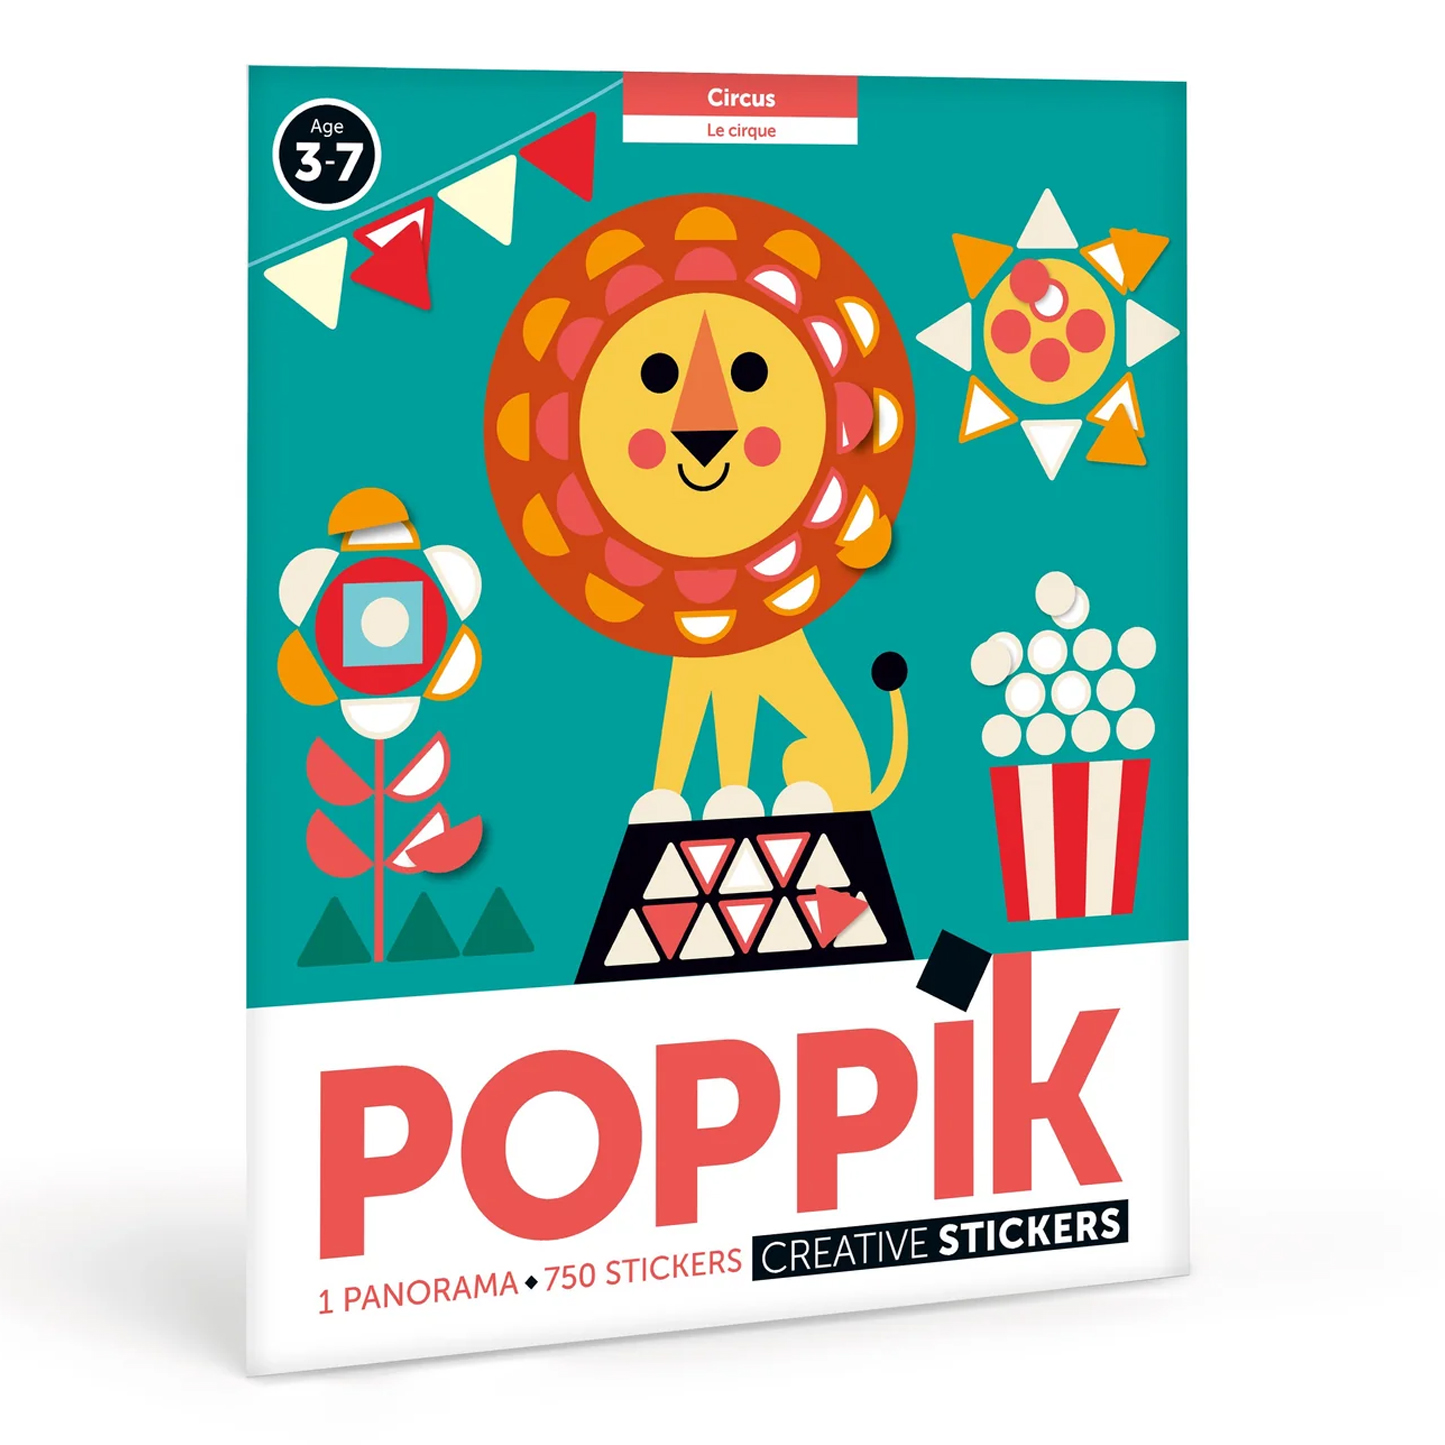  Poppik Panorama Sticker Poster - Circus